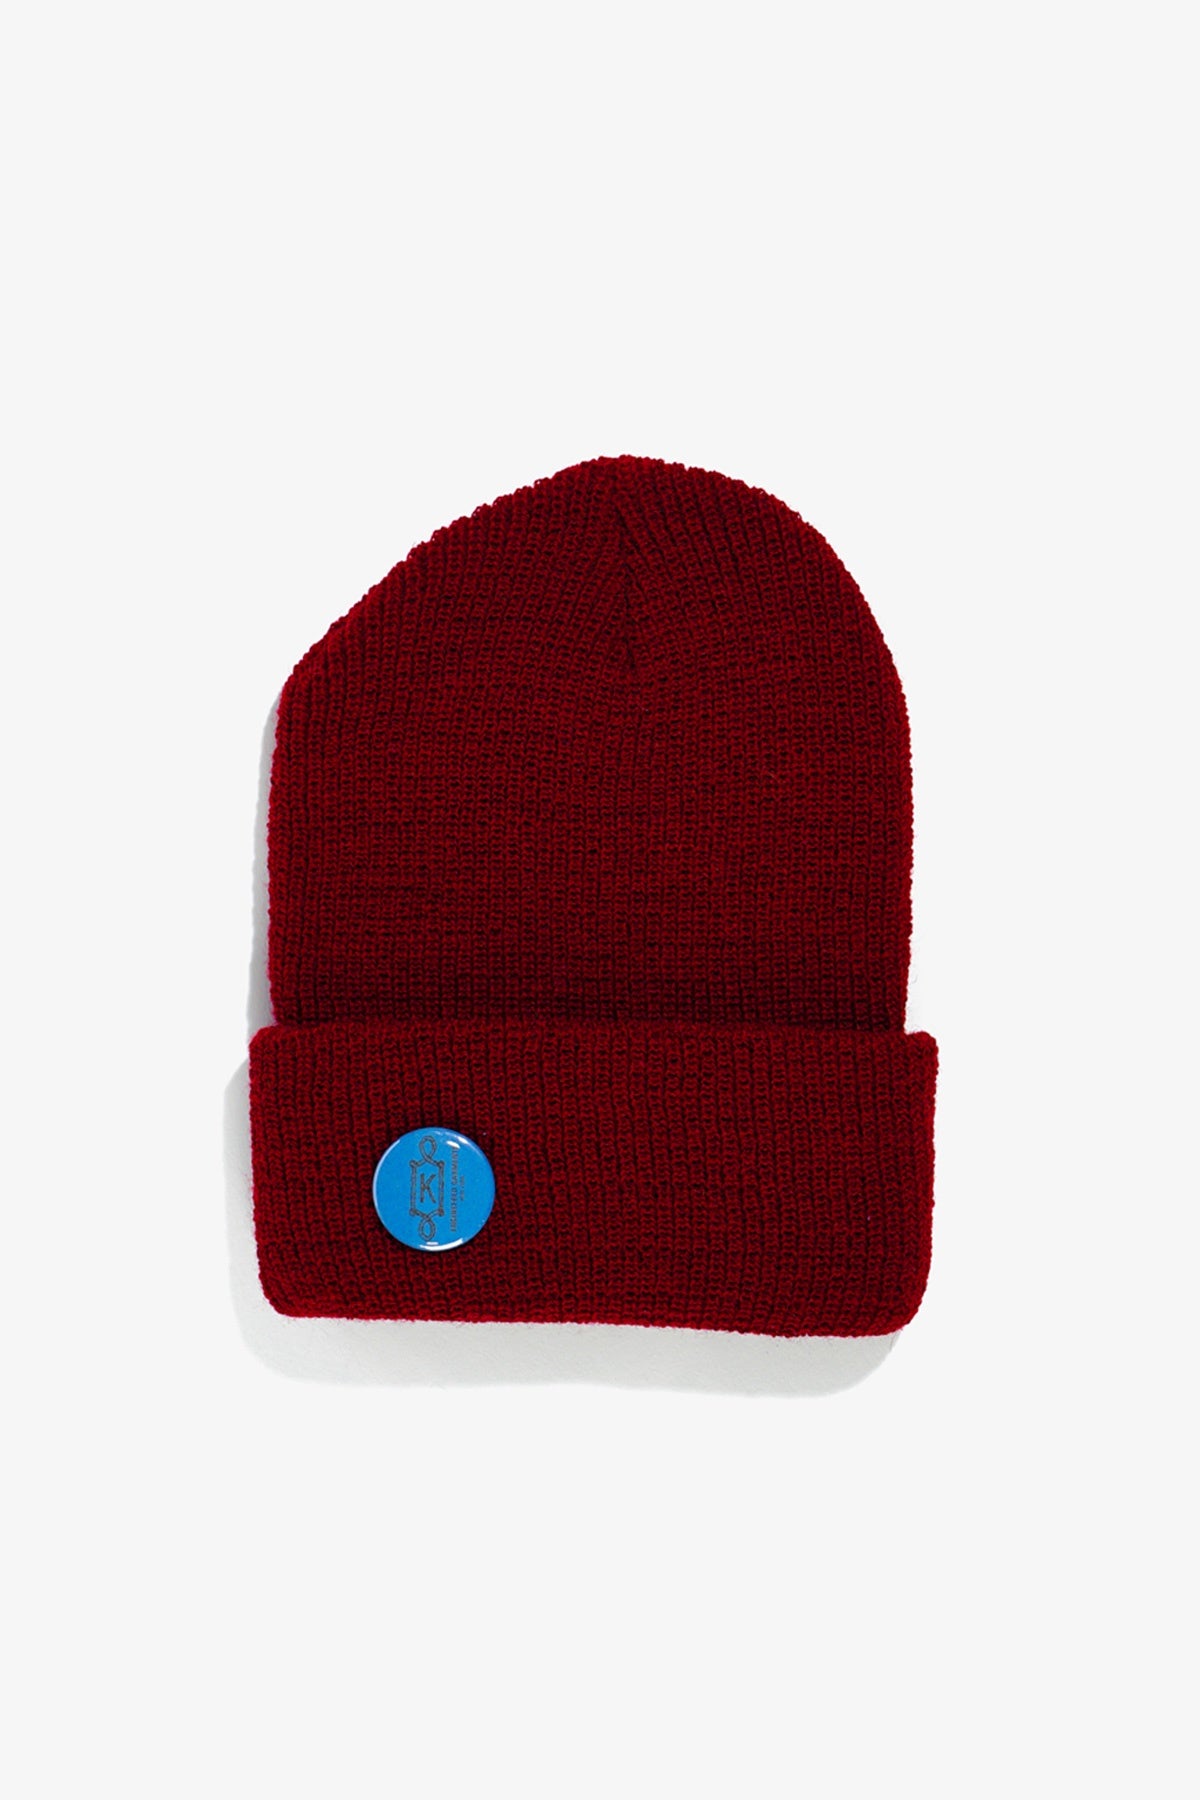 Wool Watch Cap - Red